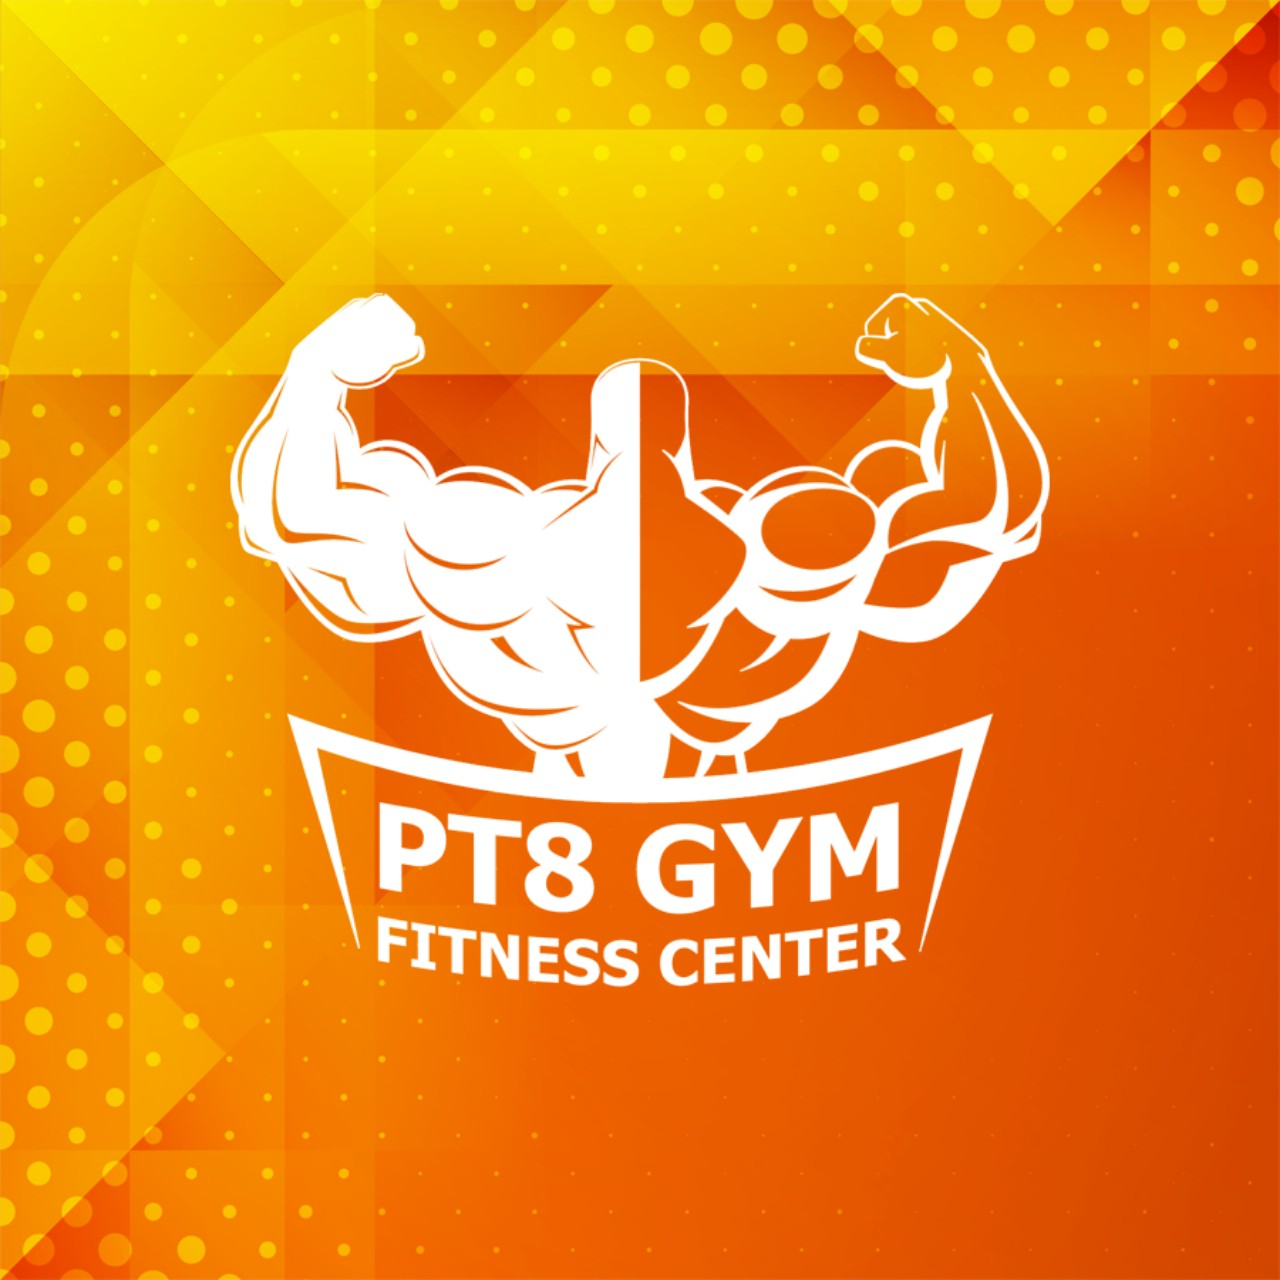 PT8 Gym Fitness Center